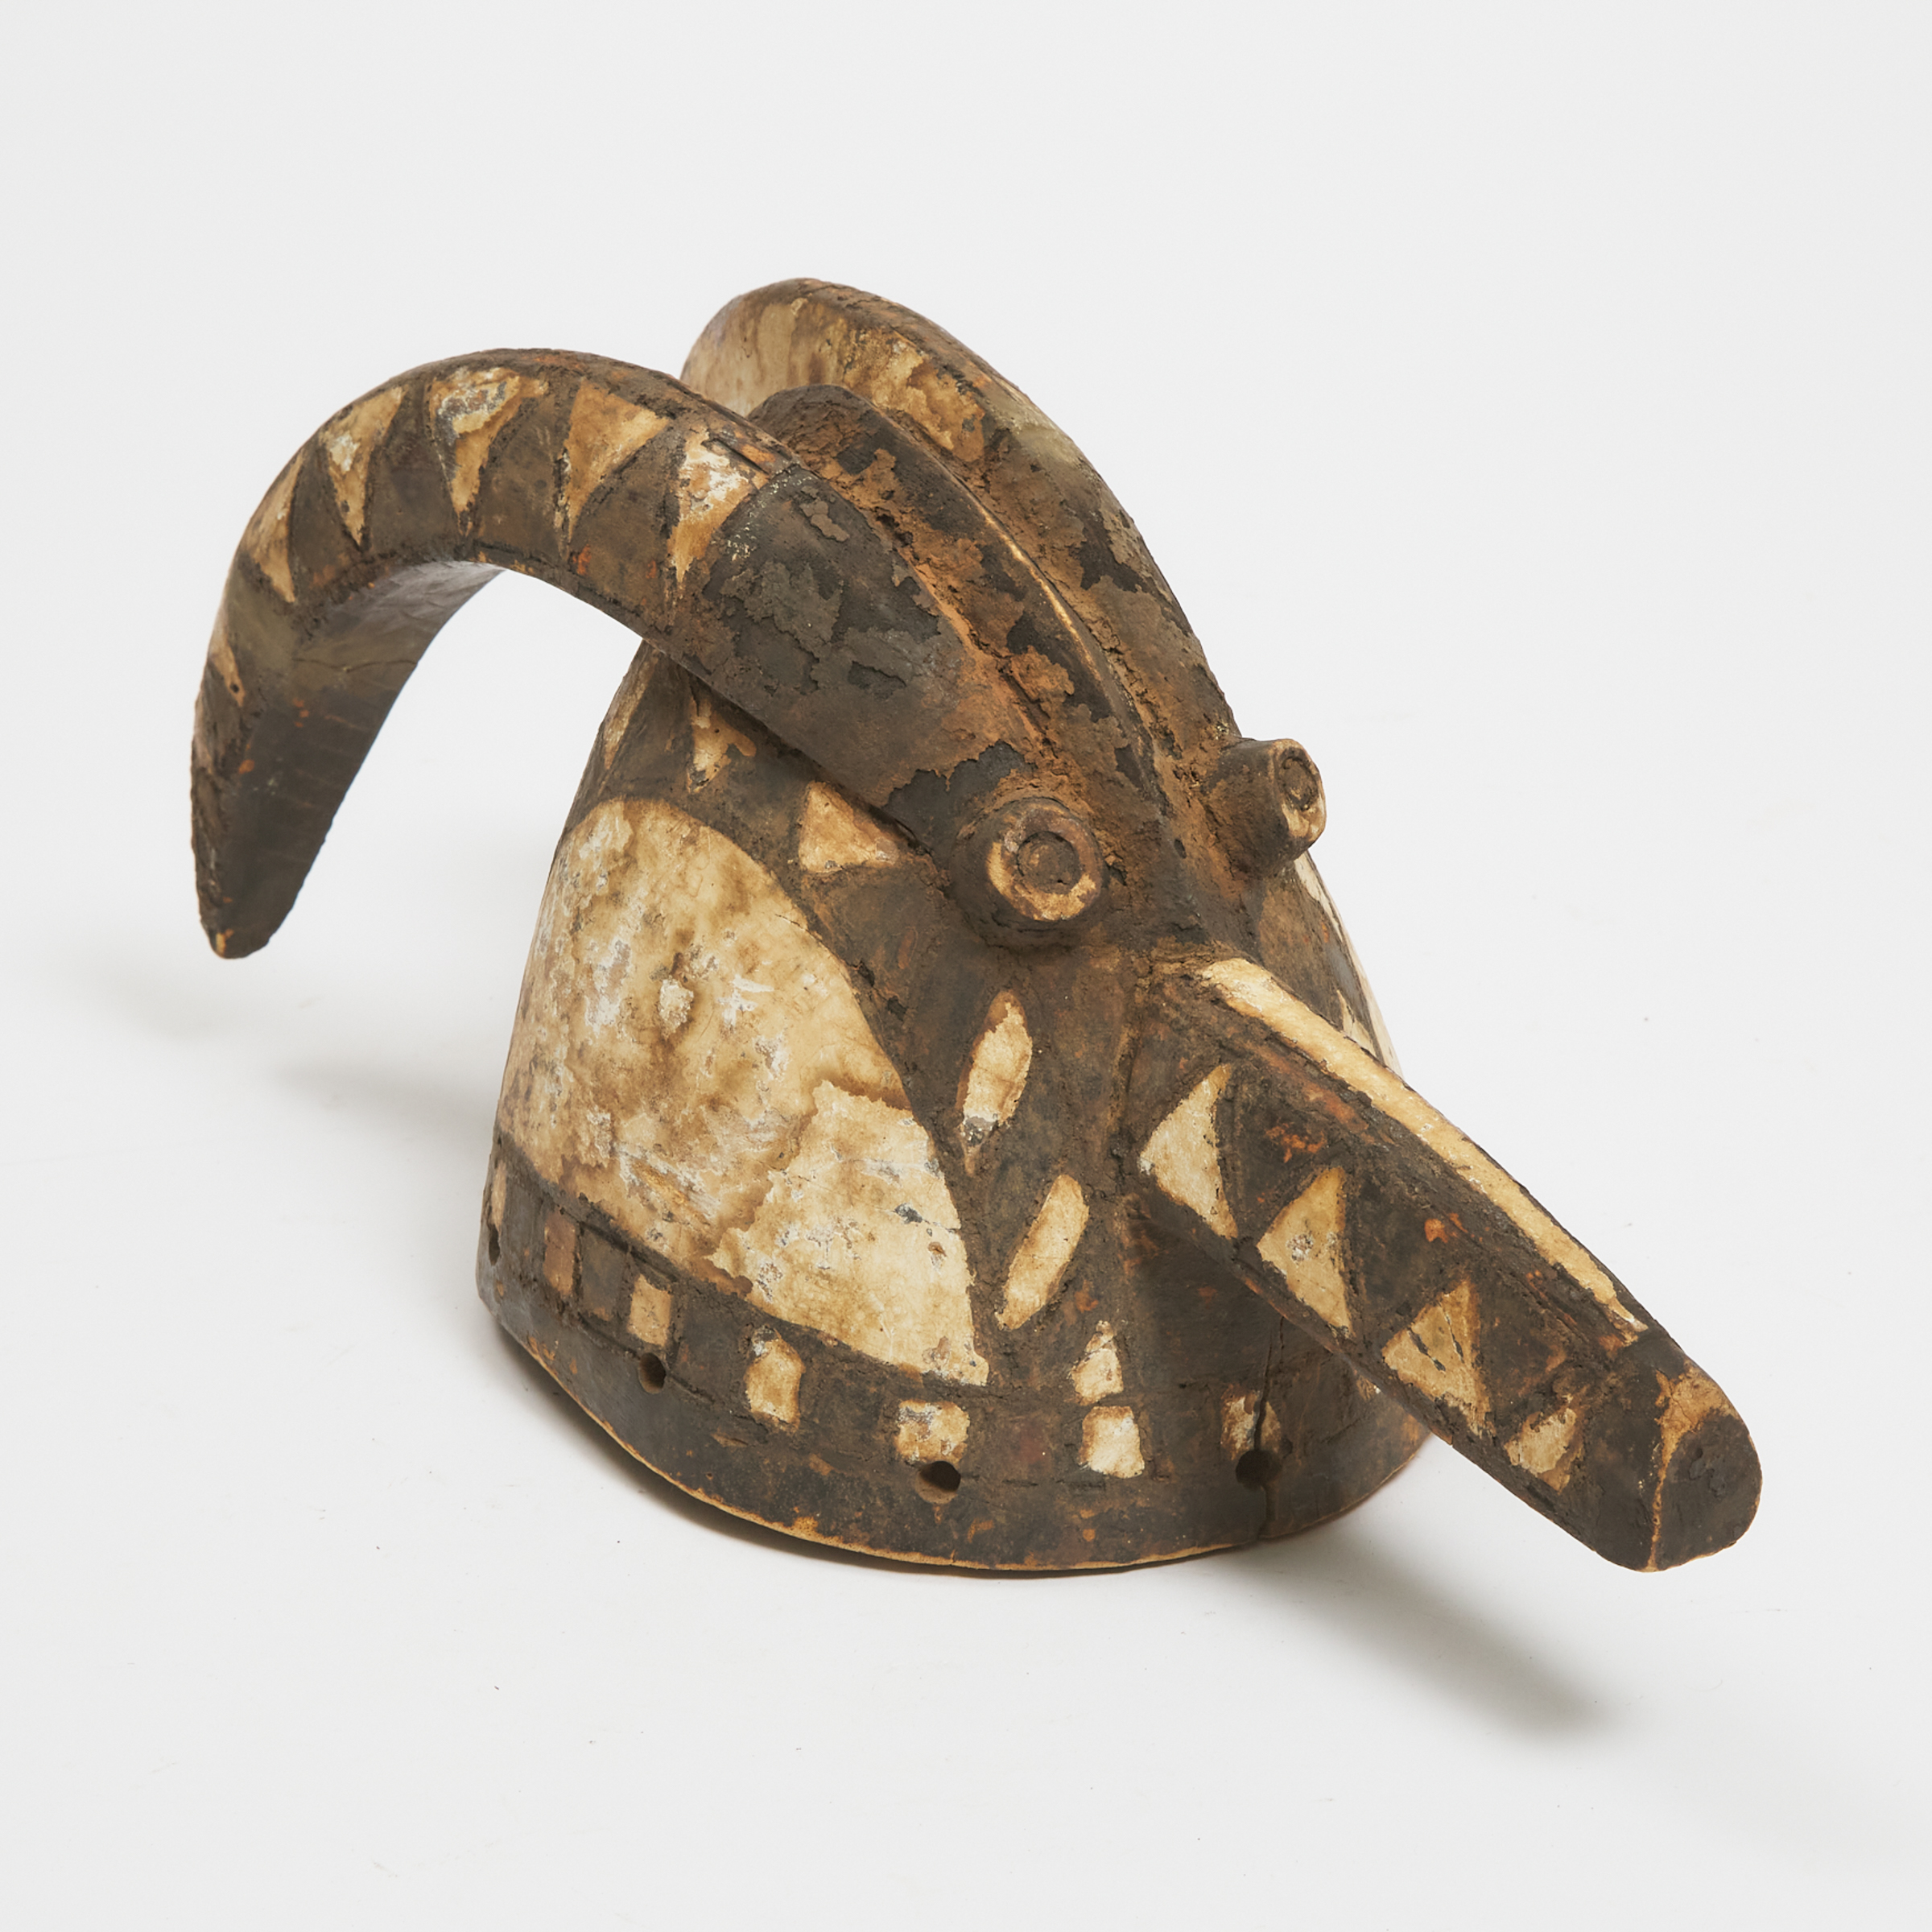 Mossi Antelope Mask, Burkina Faso, West Africa, late 20th century